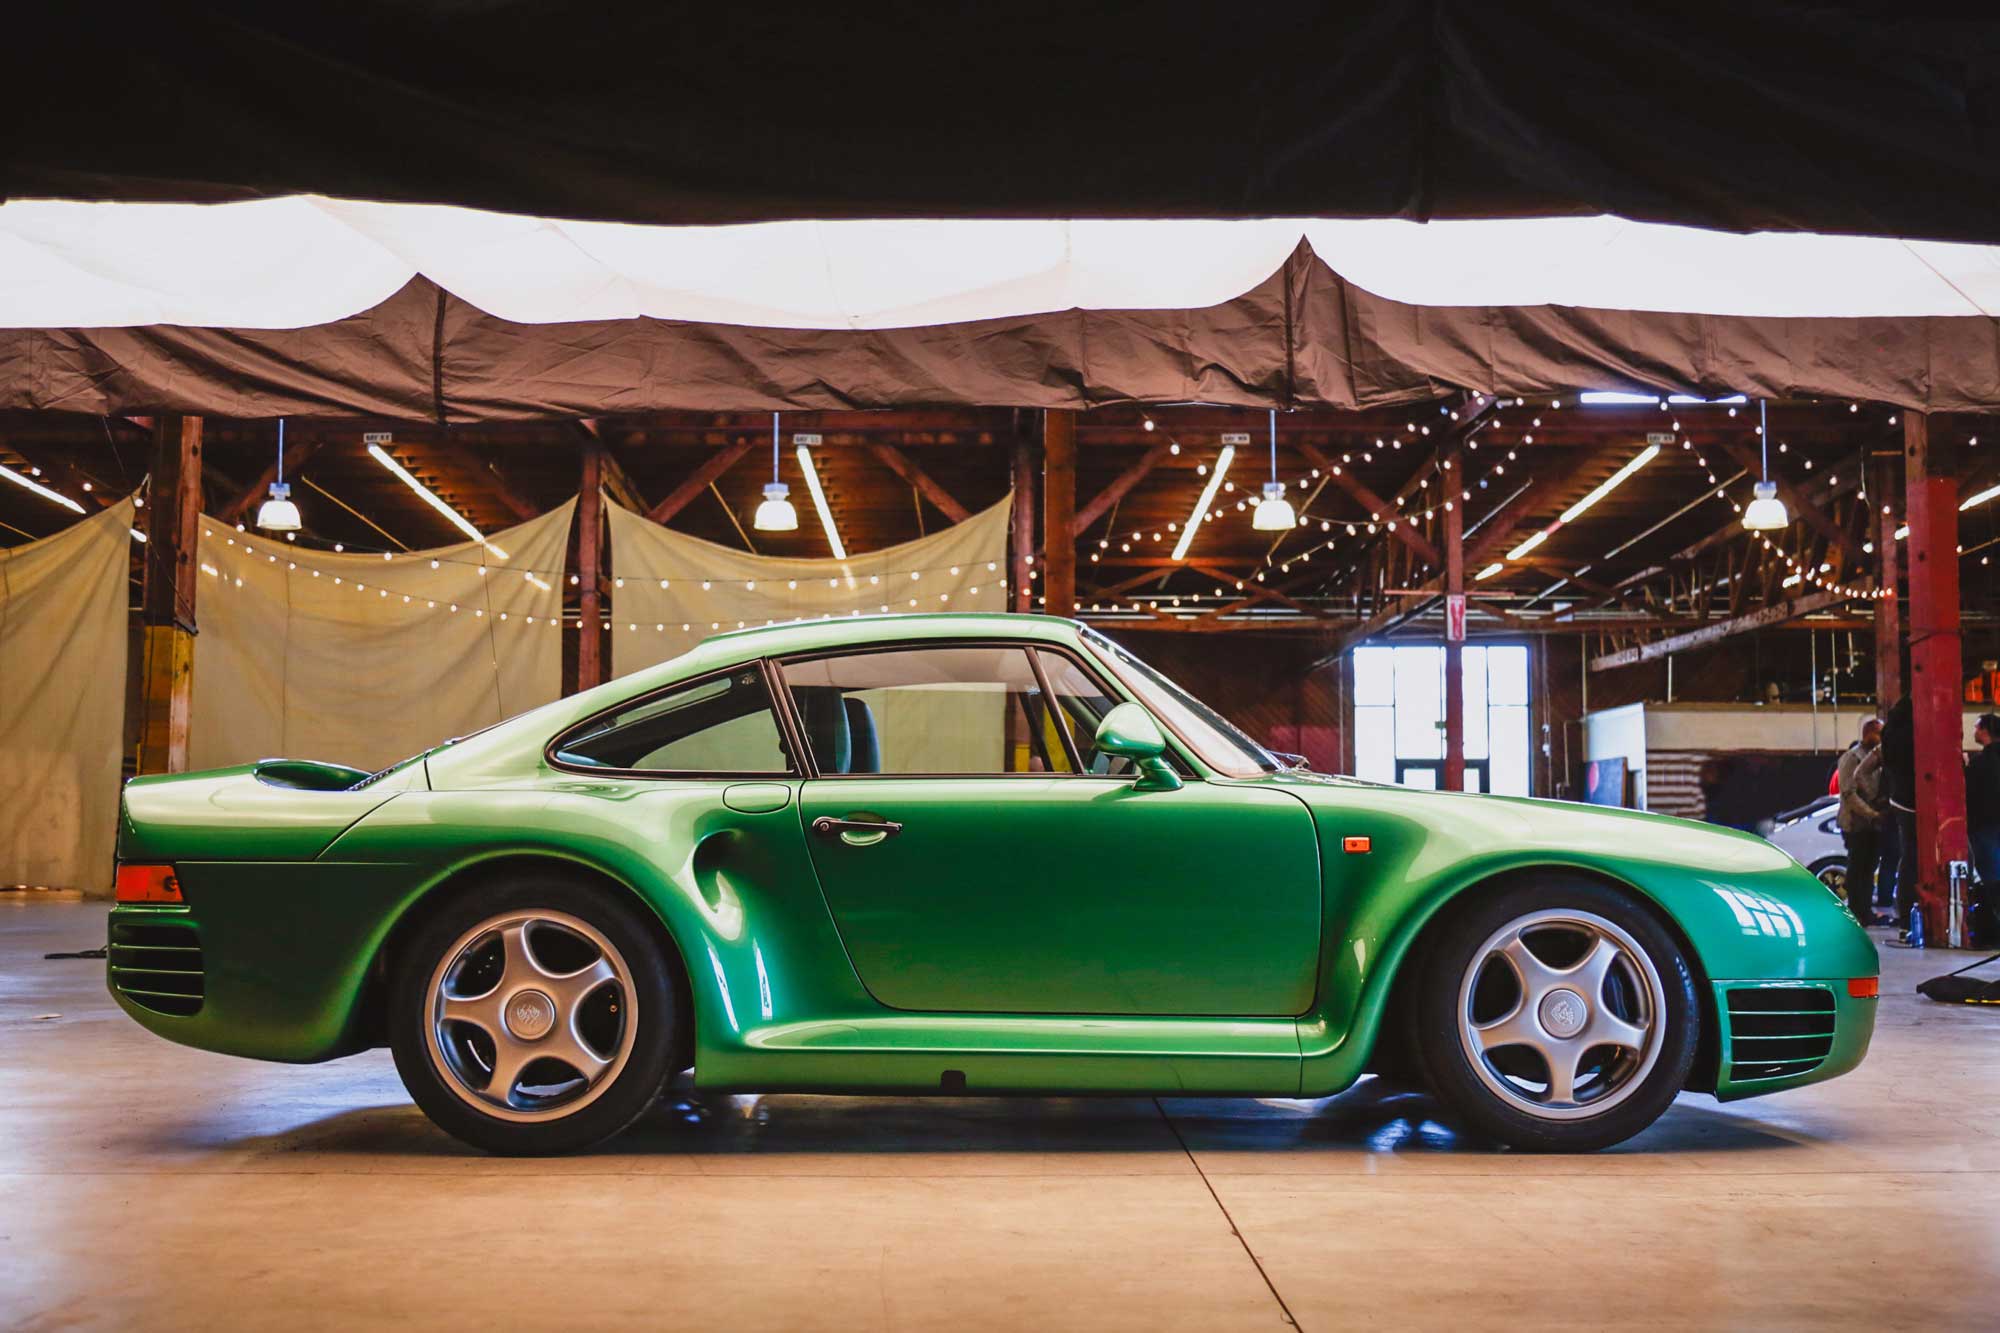 A green Porsche 959